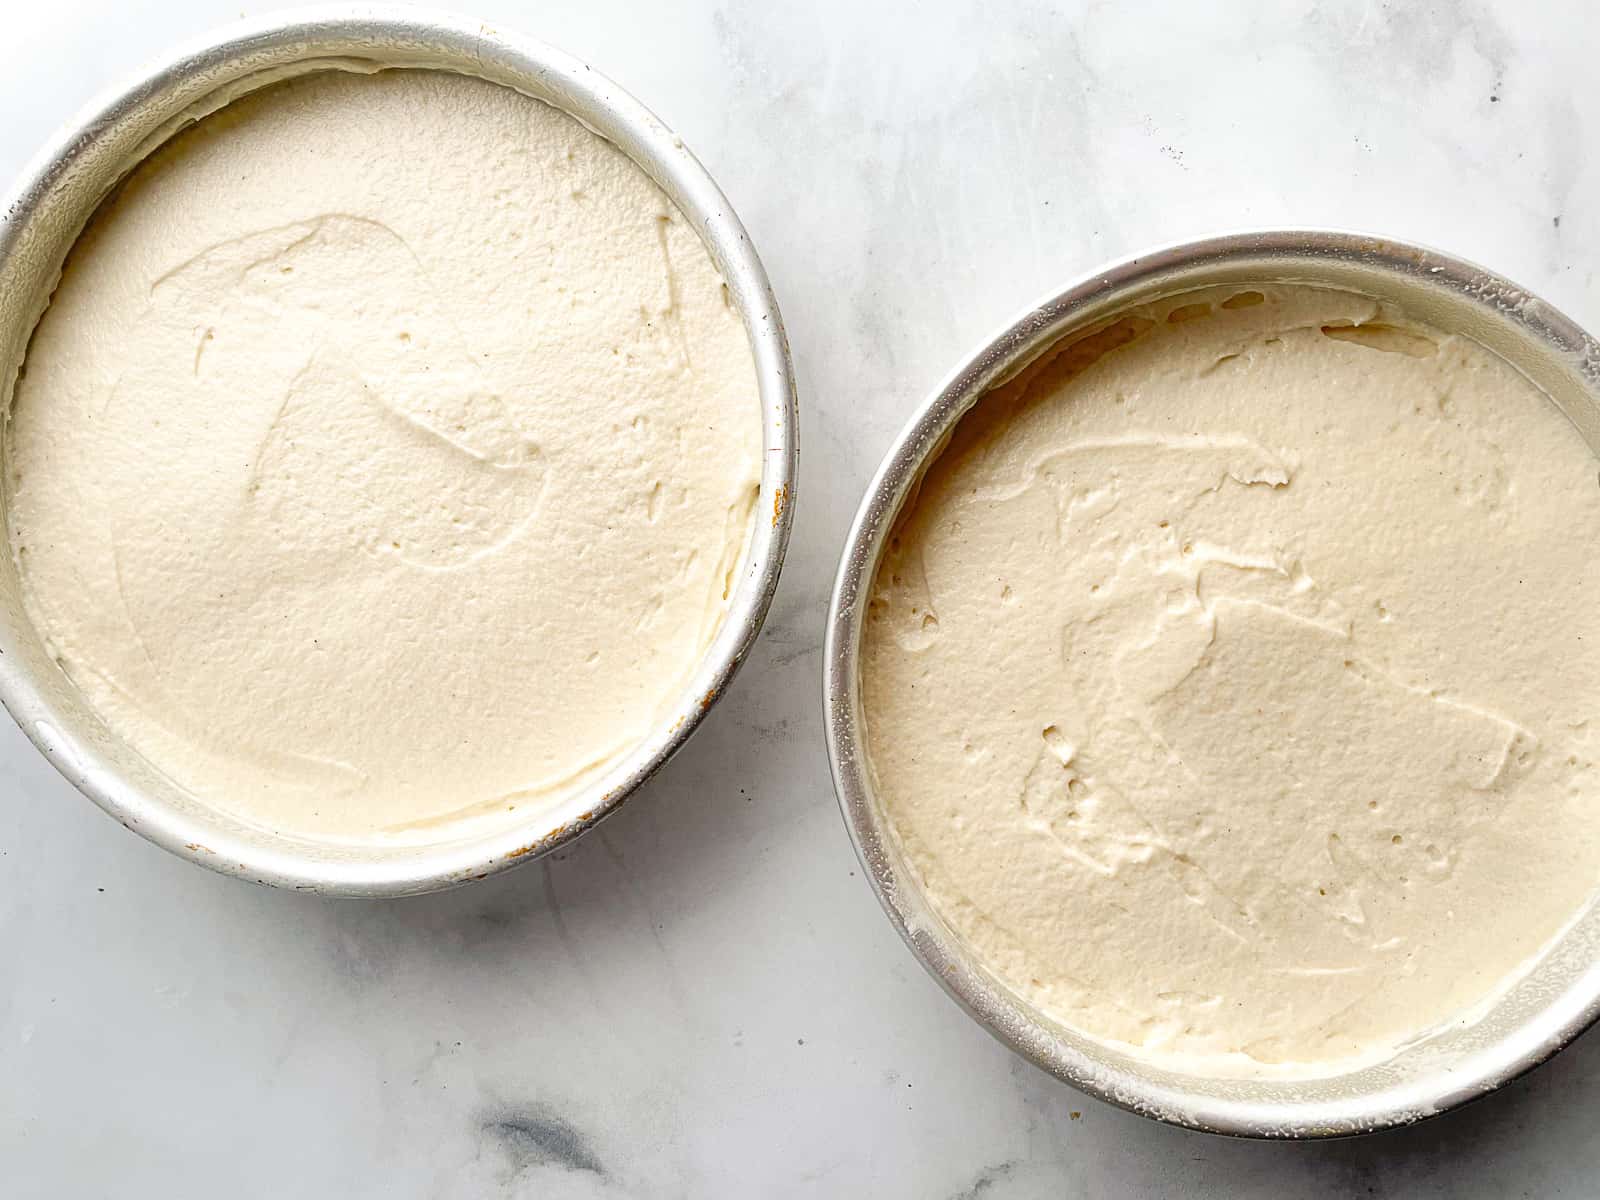 Gluten-free vanilla cake batter in two round cake pans.